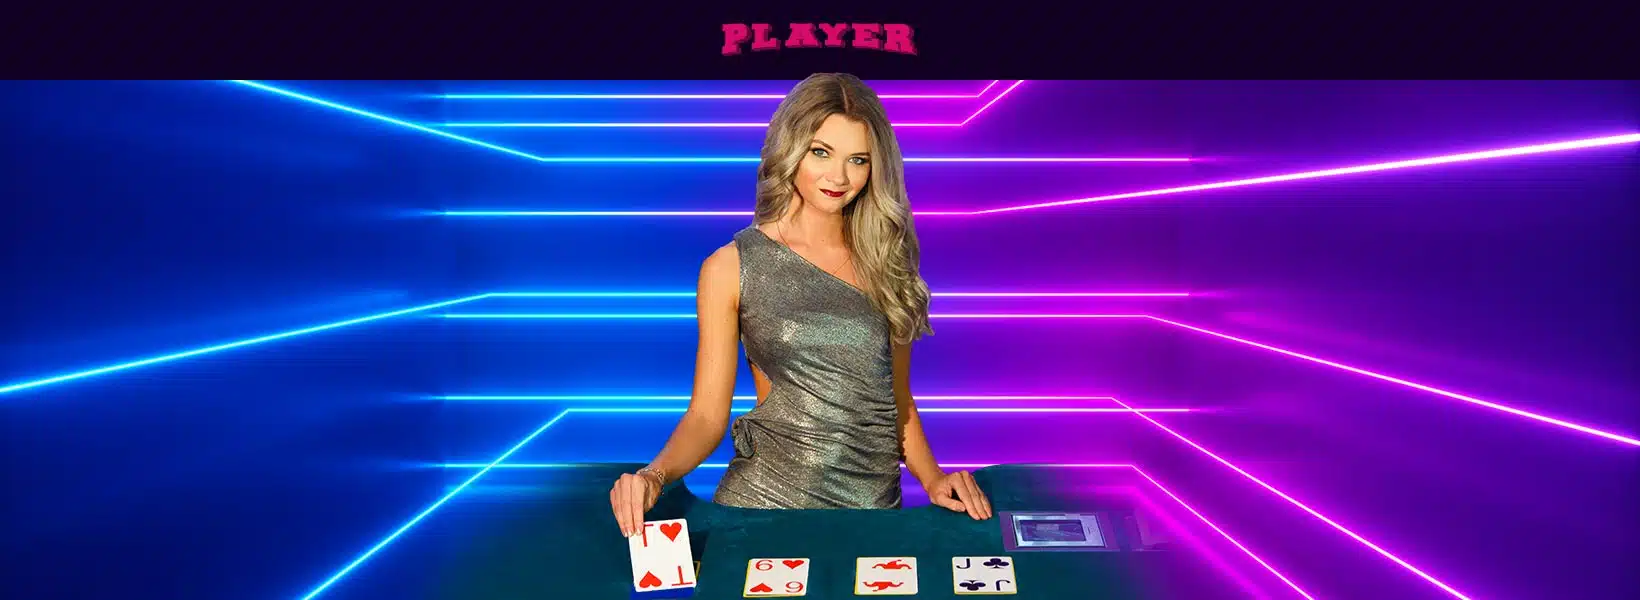 videopoker player casino online